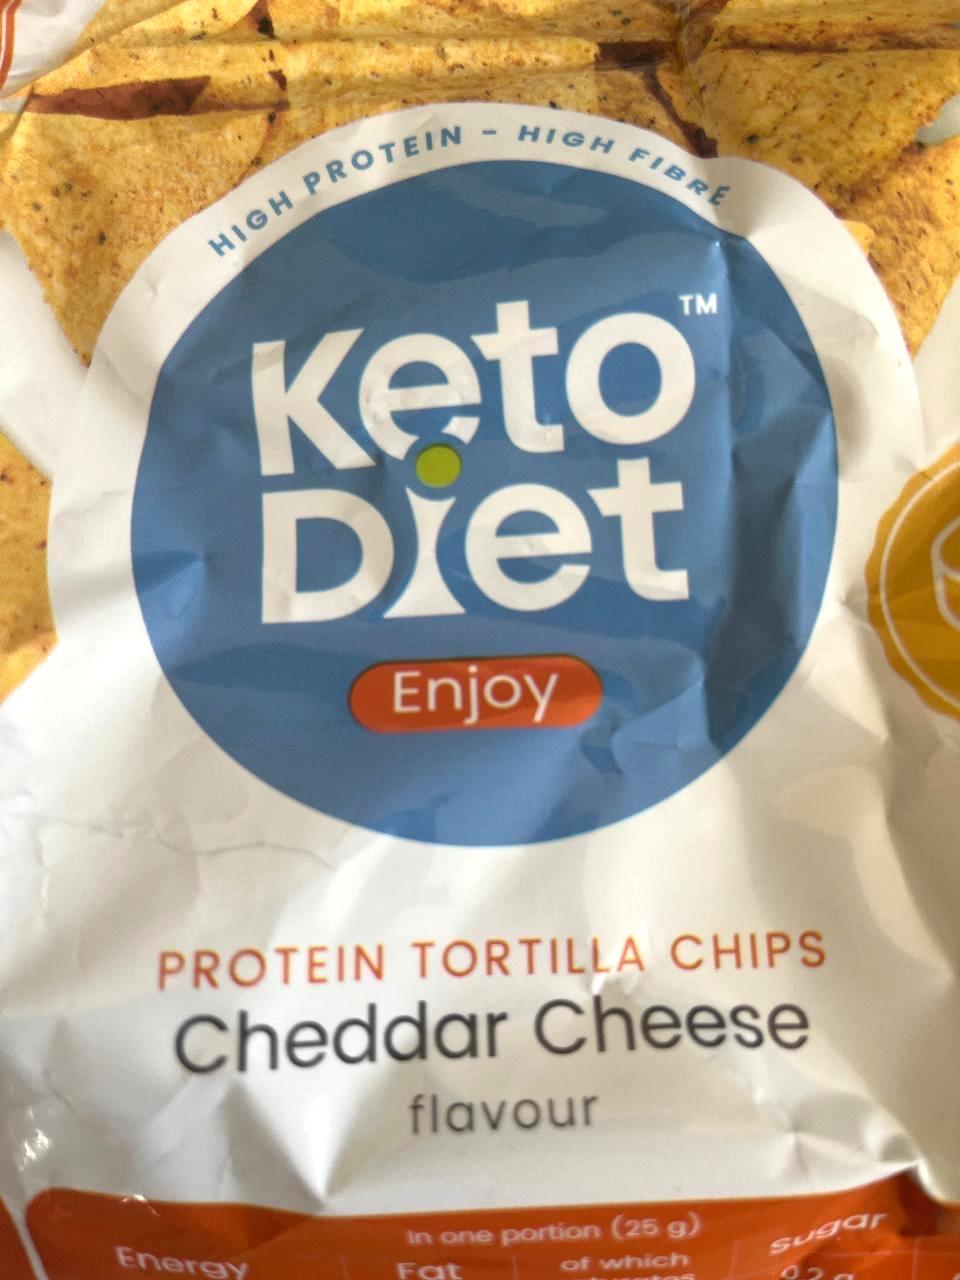 Képek - Protein tortilla chips Cheddar cheese KetoDiet